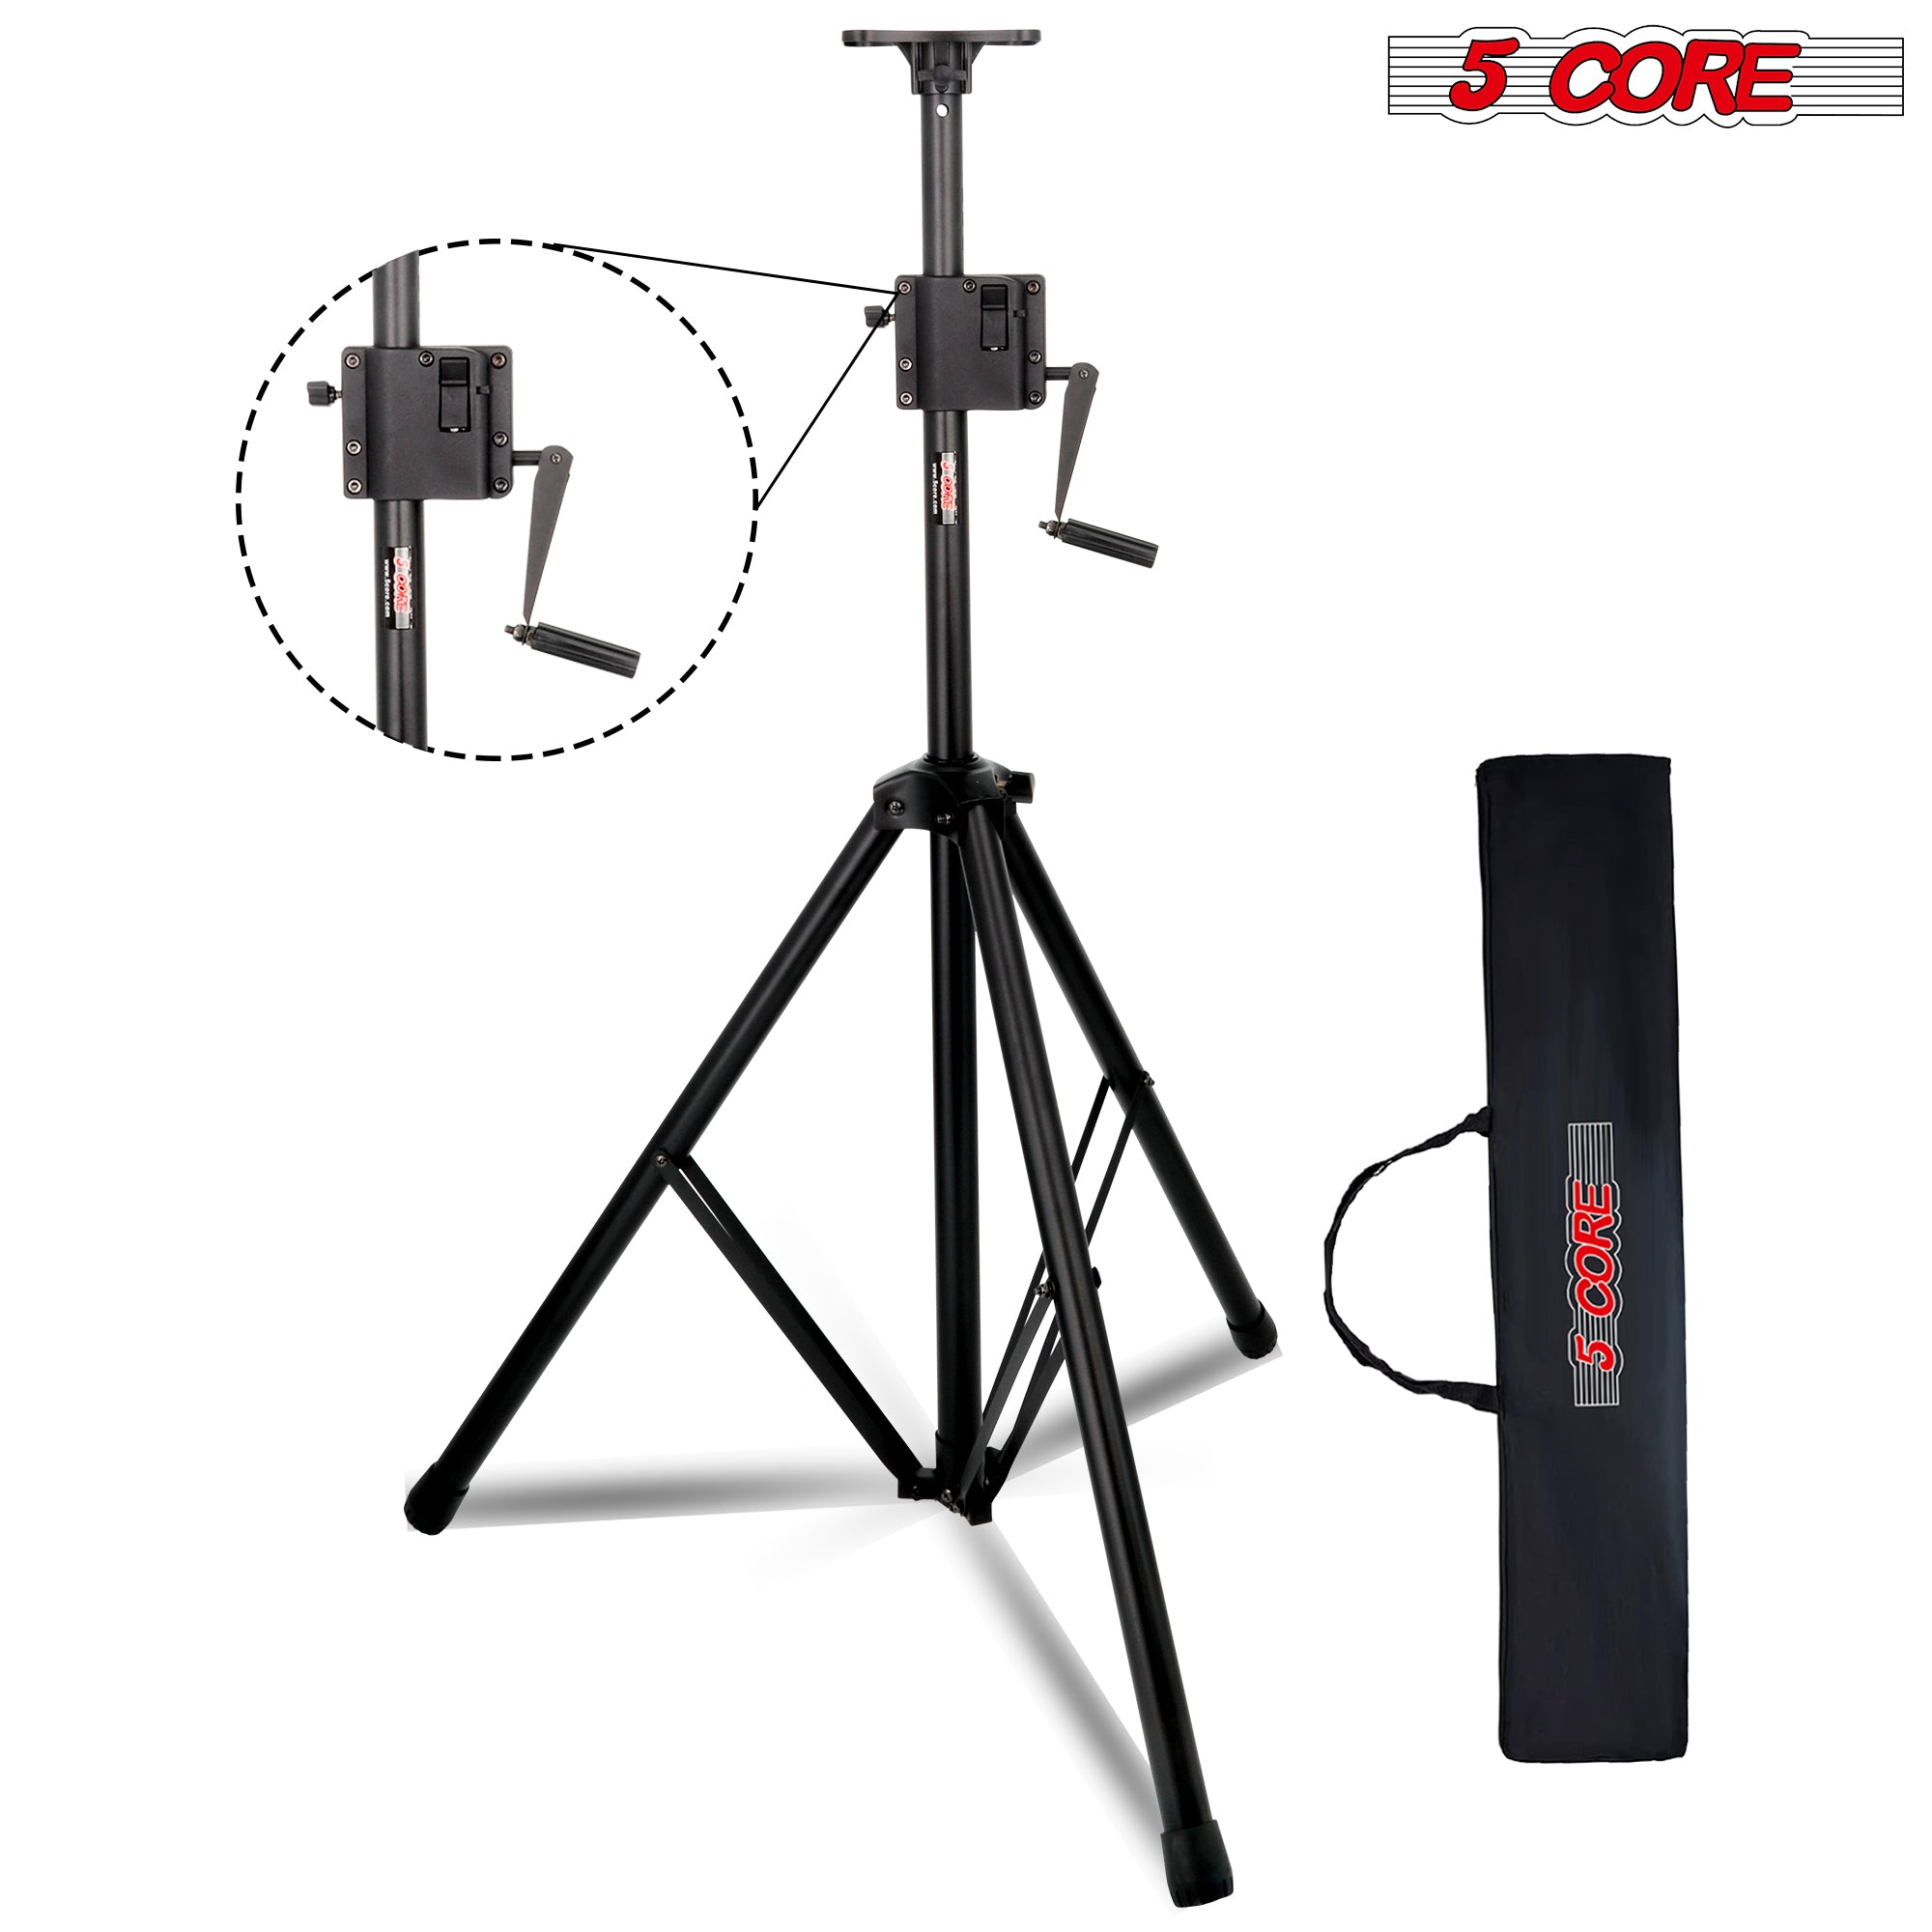 5Core Crank Up Speaker Stand Tripod DJ Studio Monitor Stands 6ft-10 185LB Capacity